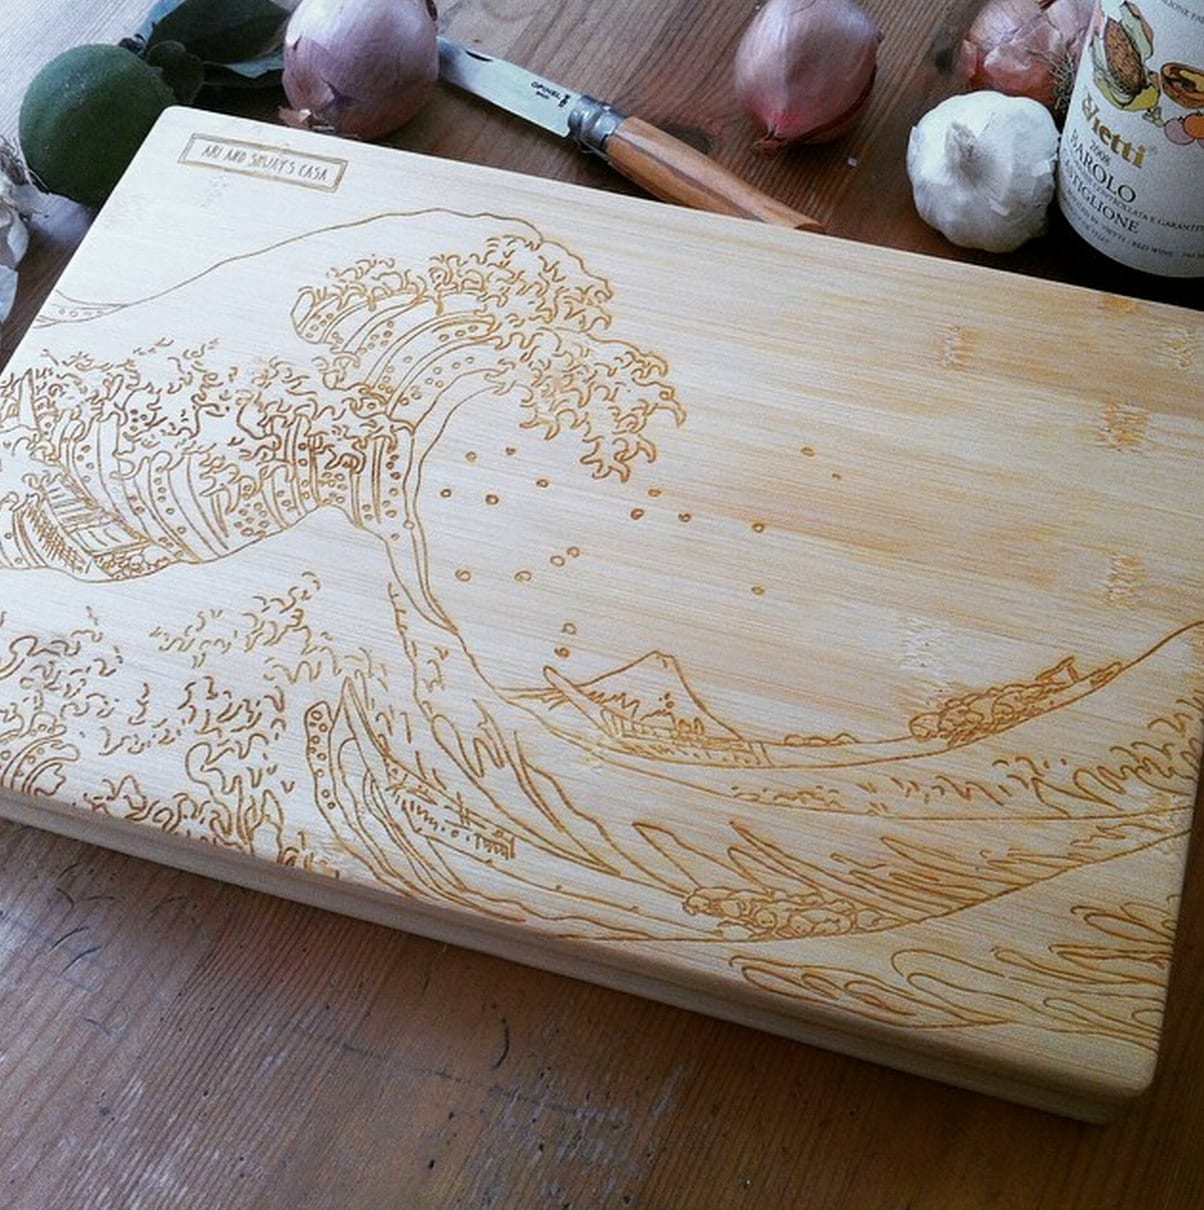 Surfboard' cutting board : r/woodworking